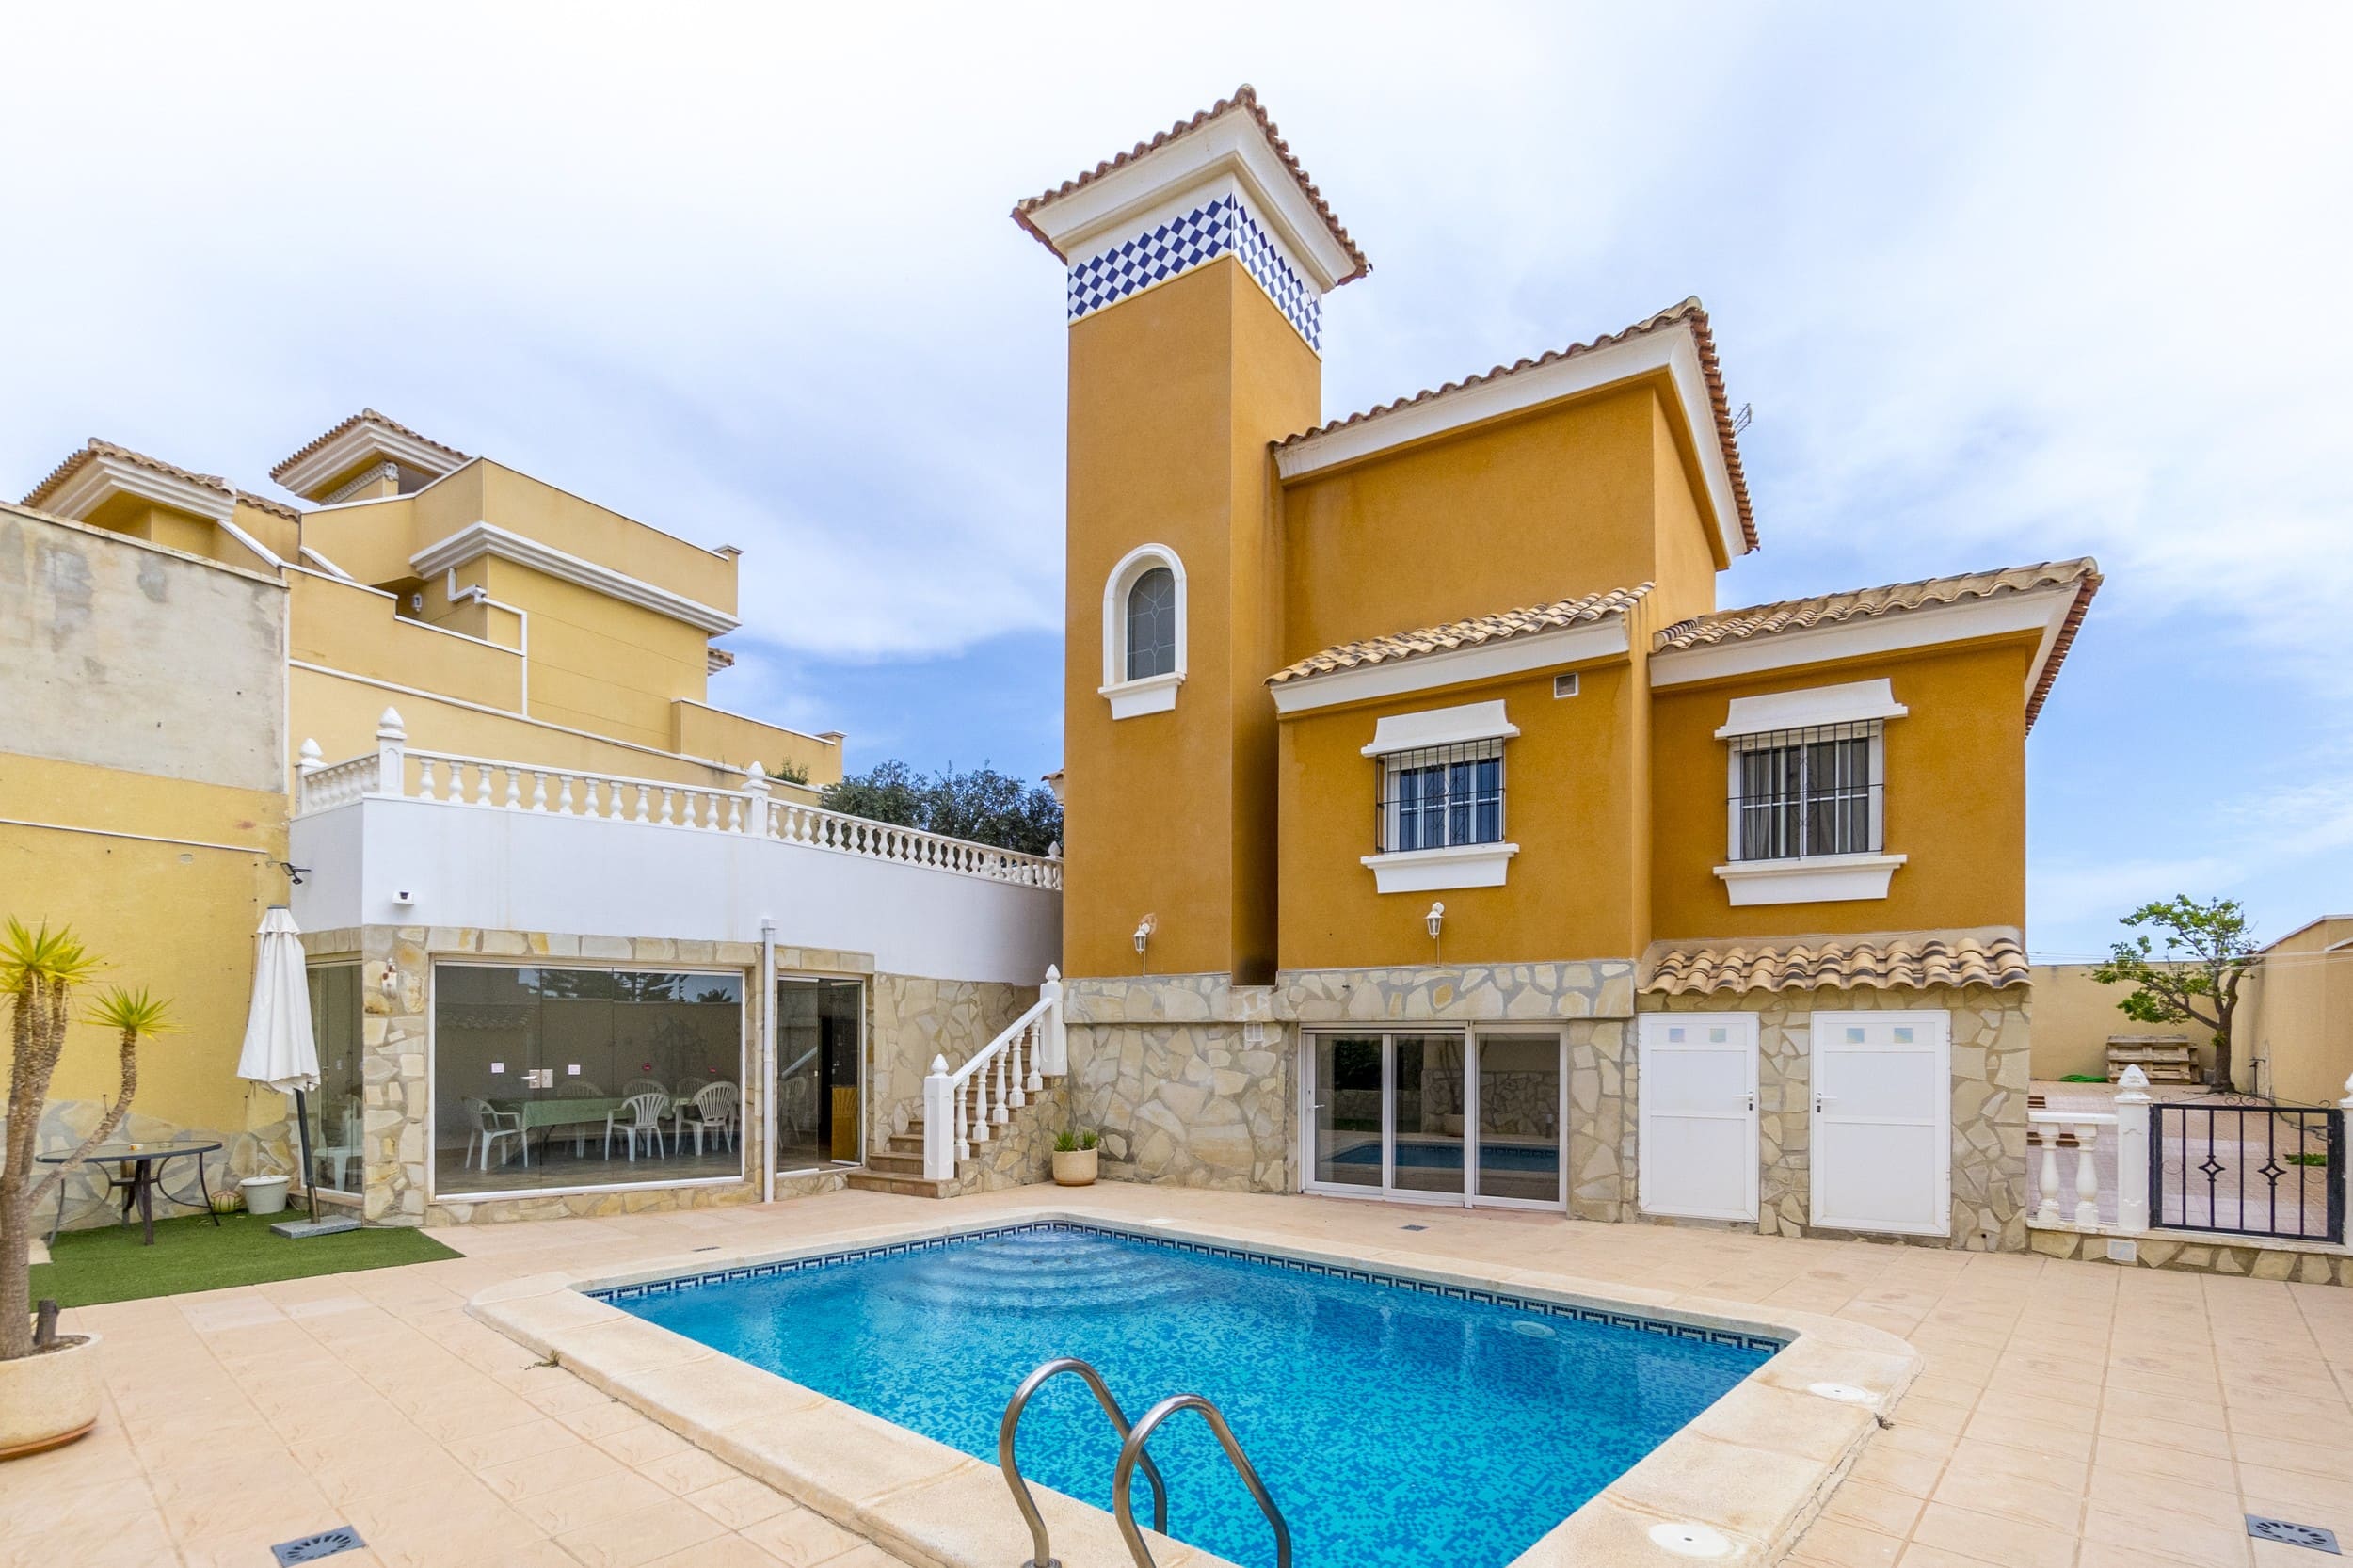 Beautiful detached villa with swimming pool and underbuild for sale in Las Filipinas, Villamartin.